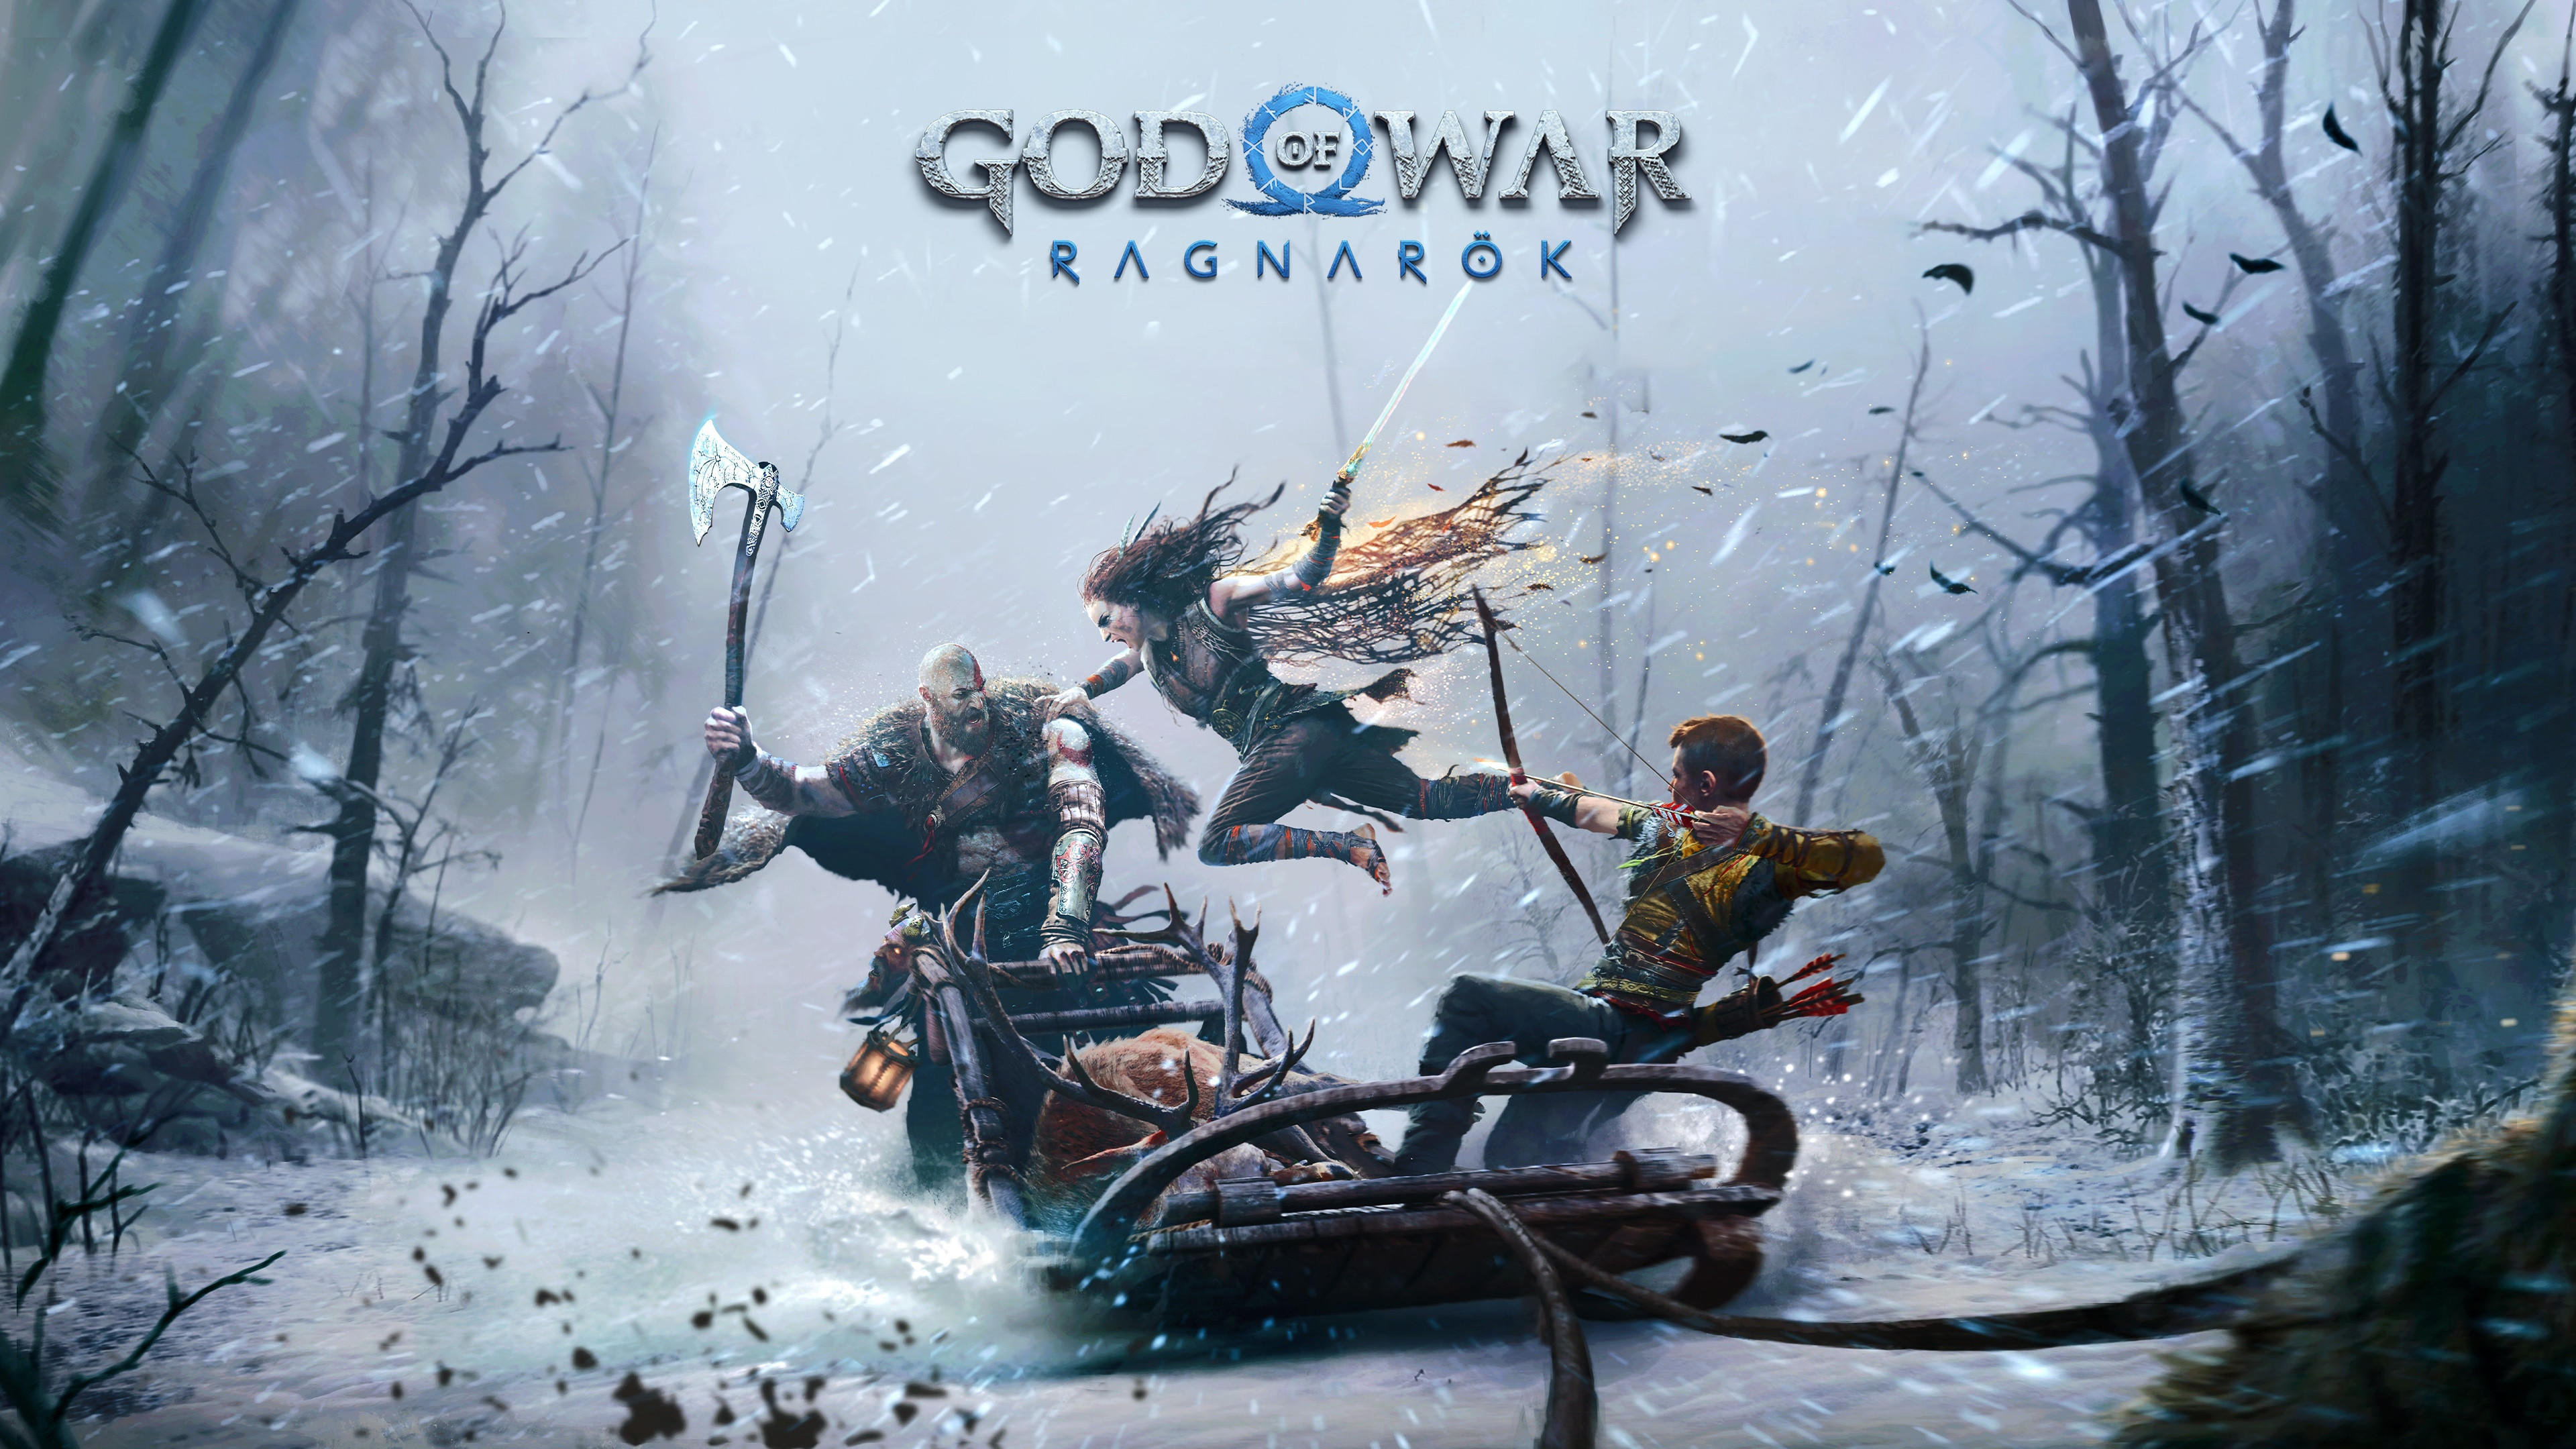 God of War Ragnarok Wishing Well location and rewards list - Polygon